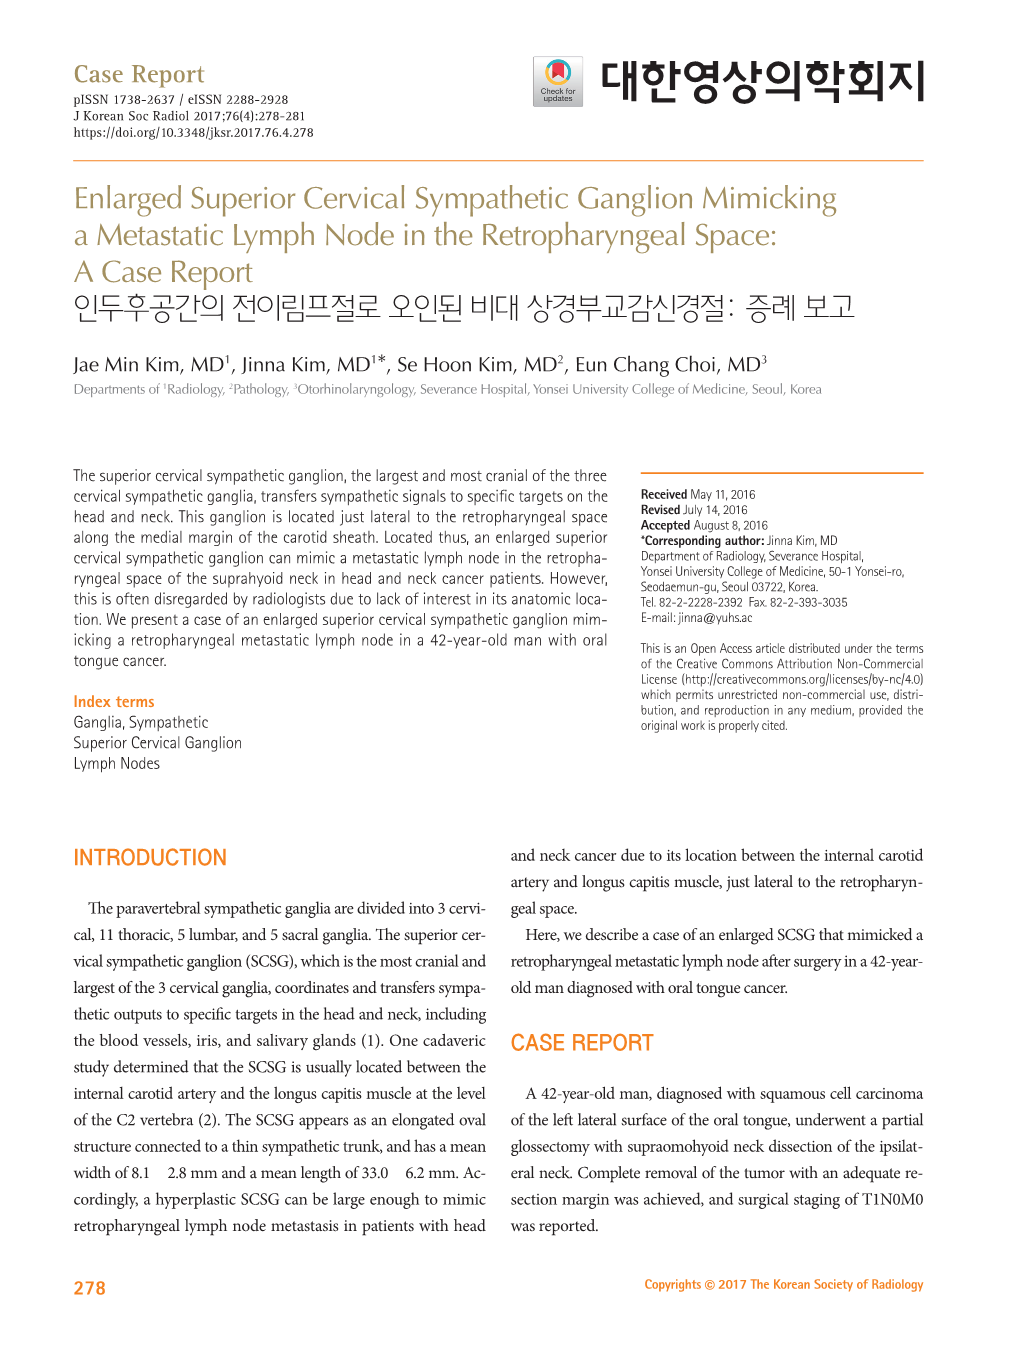 Enlarged Superior Cervical Sympathetic Ganglion Mimicking a Metastatic Lymph Node in the Retropharyngeal Space: a Case Report 인두후공간의 전이림프절로 오인된 비대 상경부교감신경절: 증례 보고